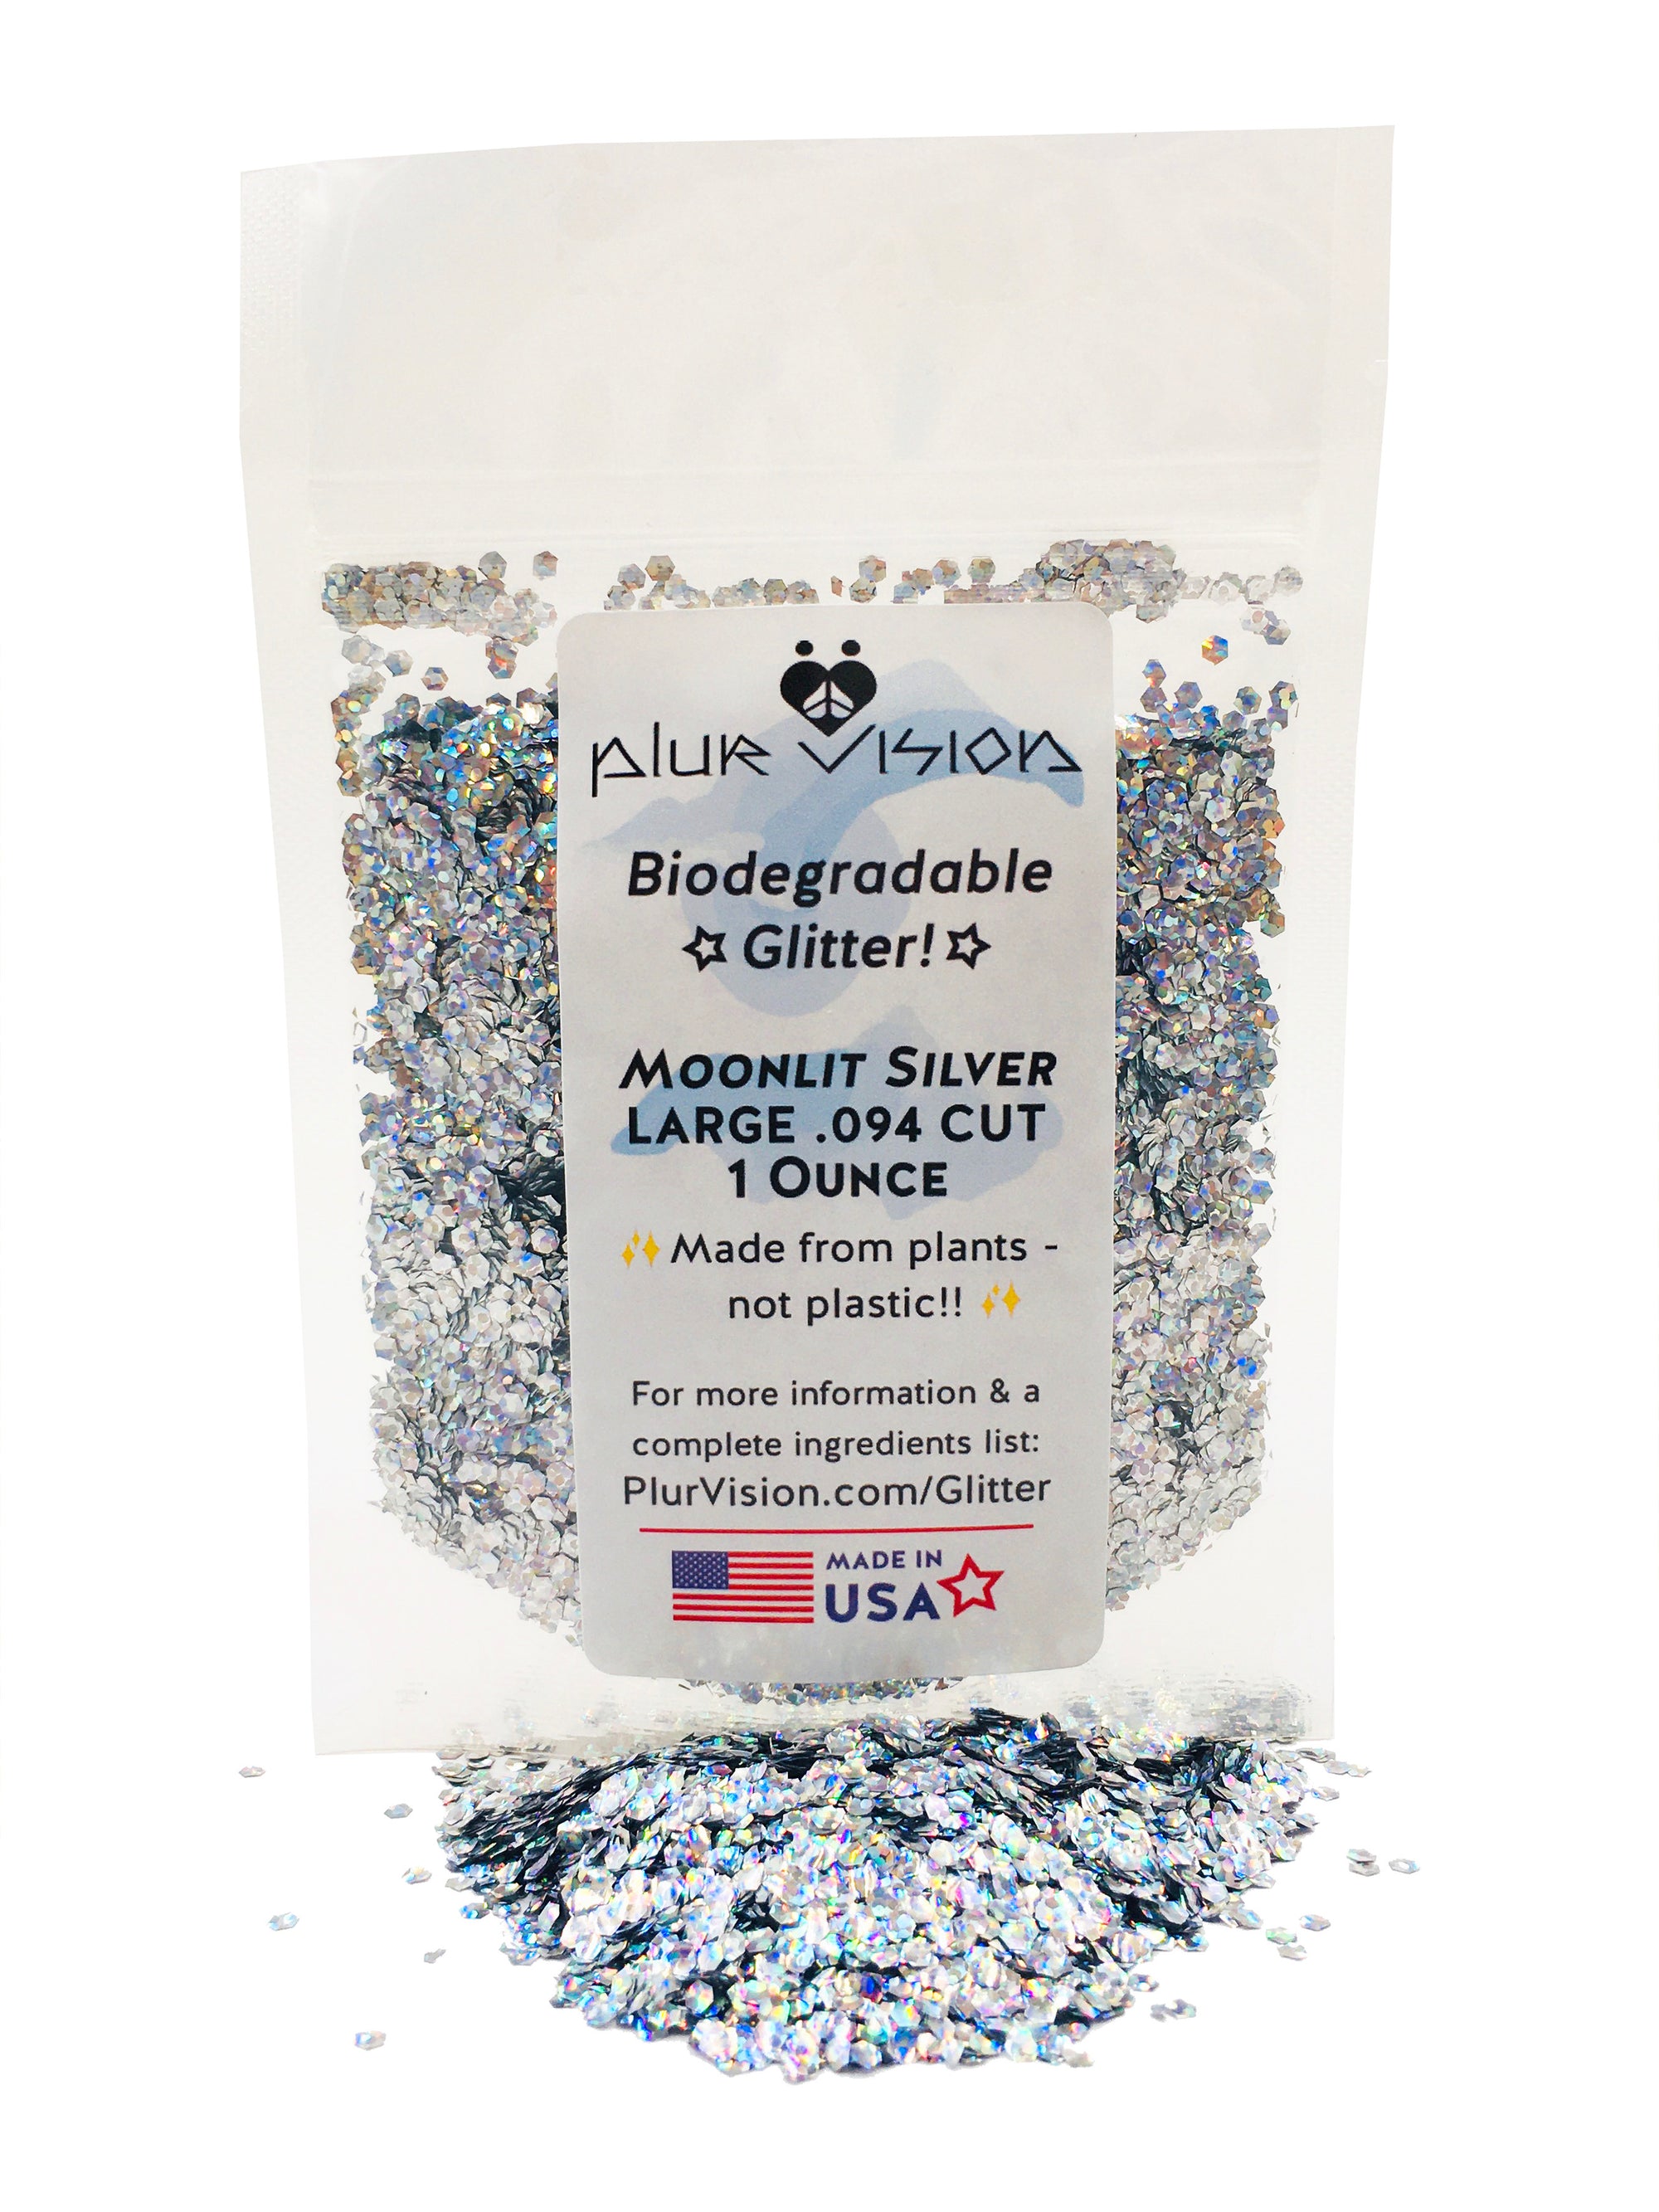 ✨Moonlit Silver Large Cut Biodegradable Glitter! ✨ - Alternative